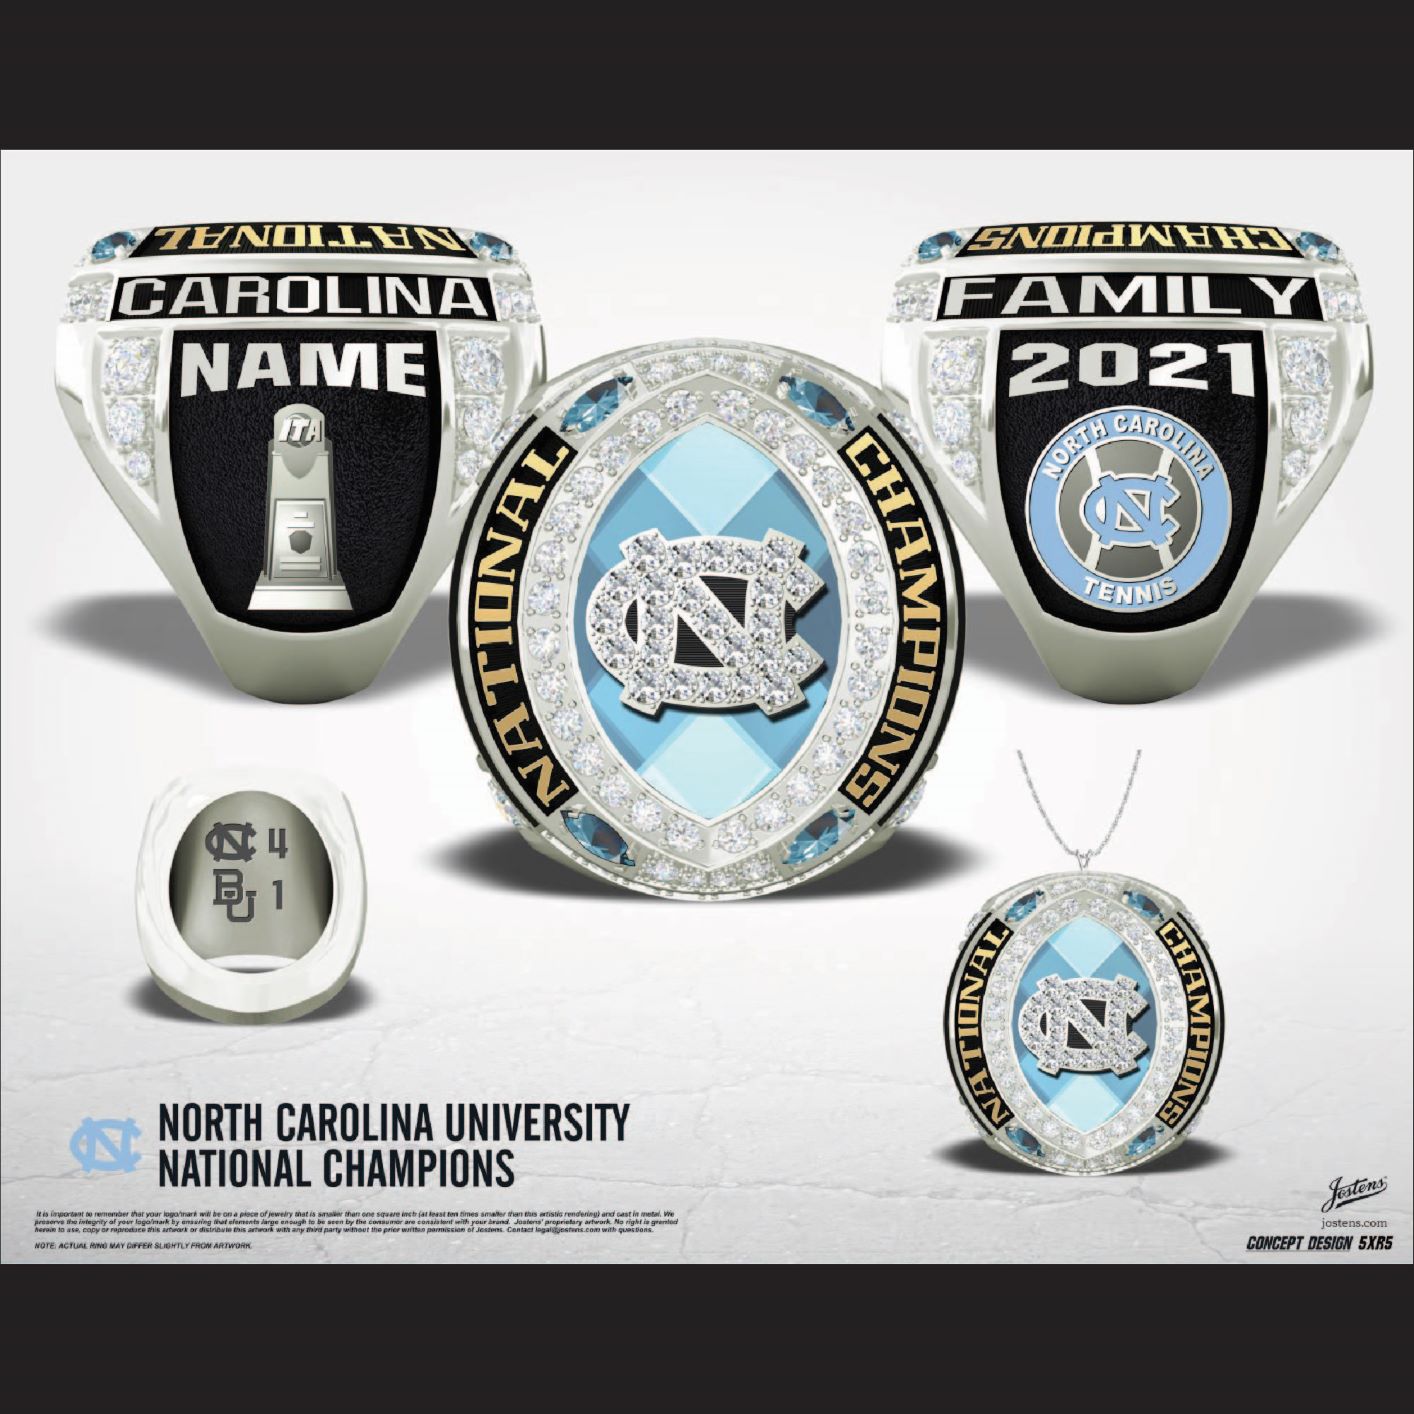 North Carolina University Men's Tennis 2021 National Championship Ring